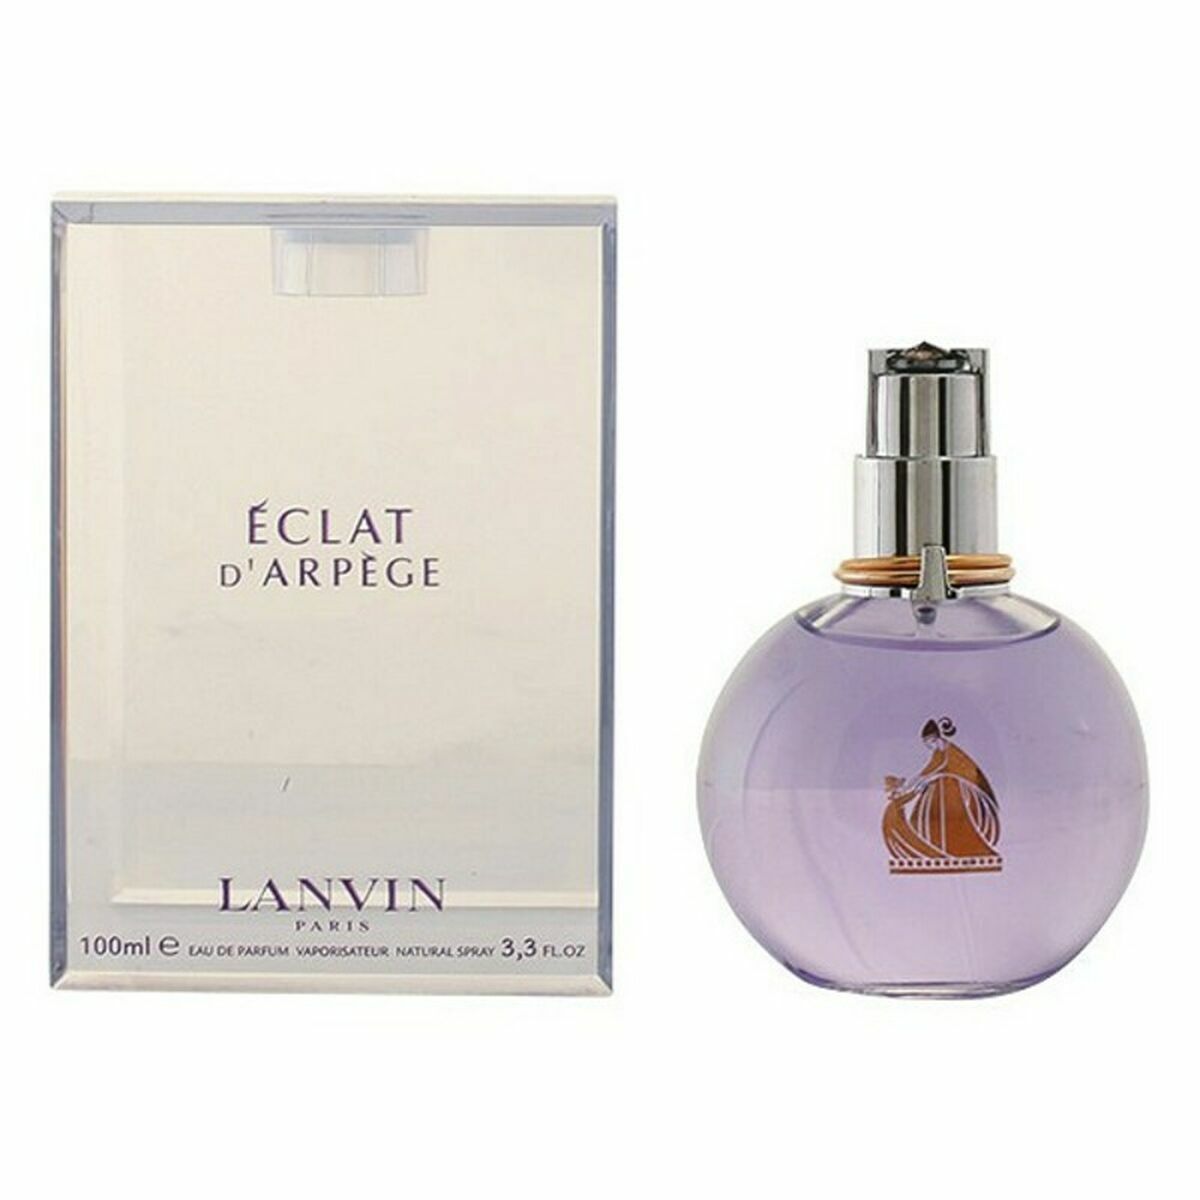 Eclat D'Arpege Eau de Parfum Spray for Women by Lanvin